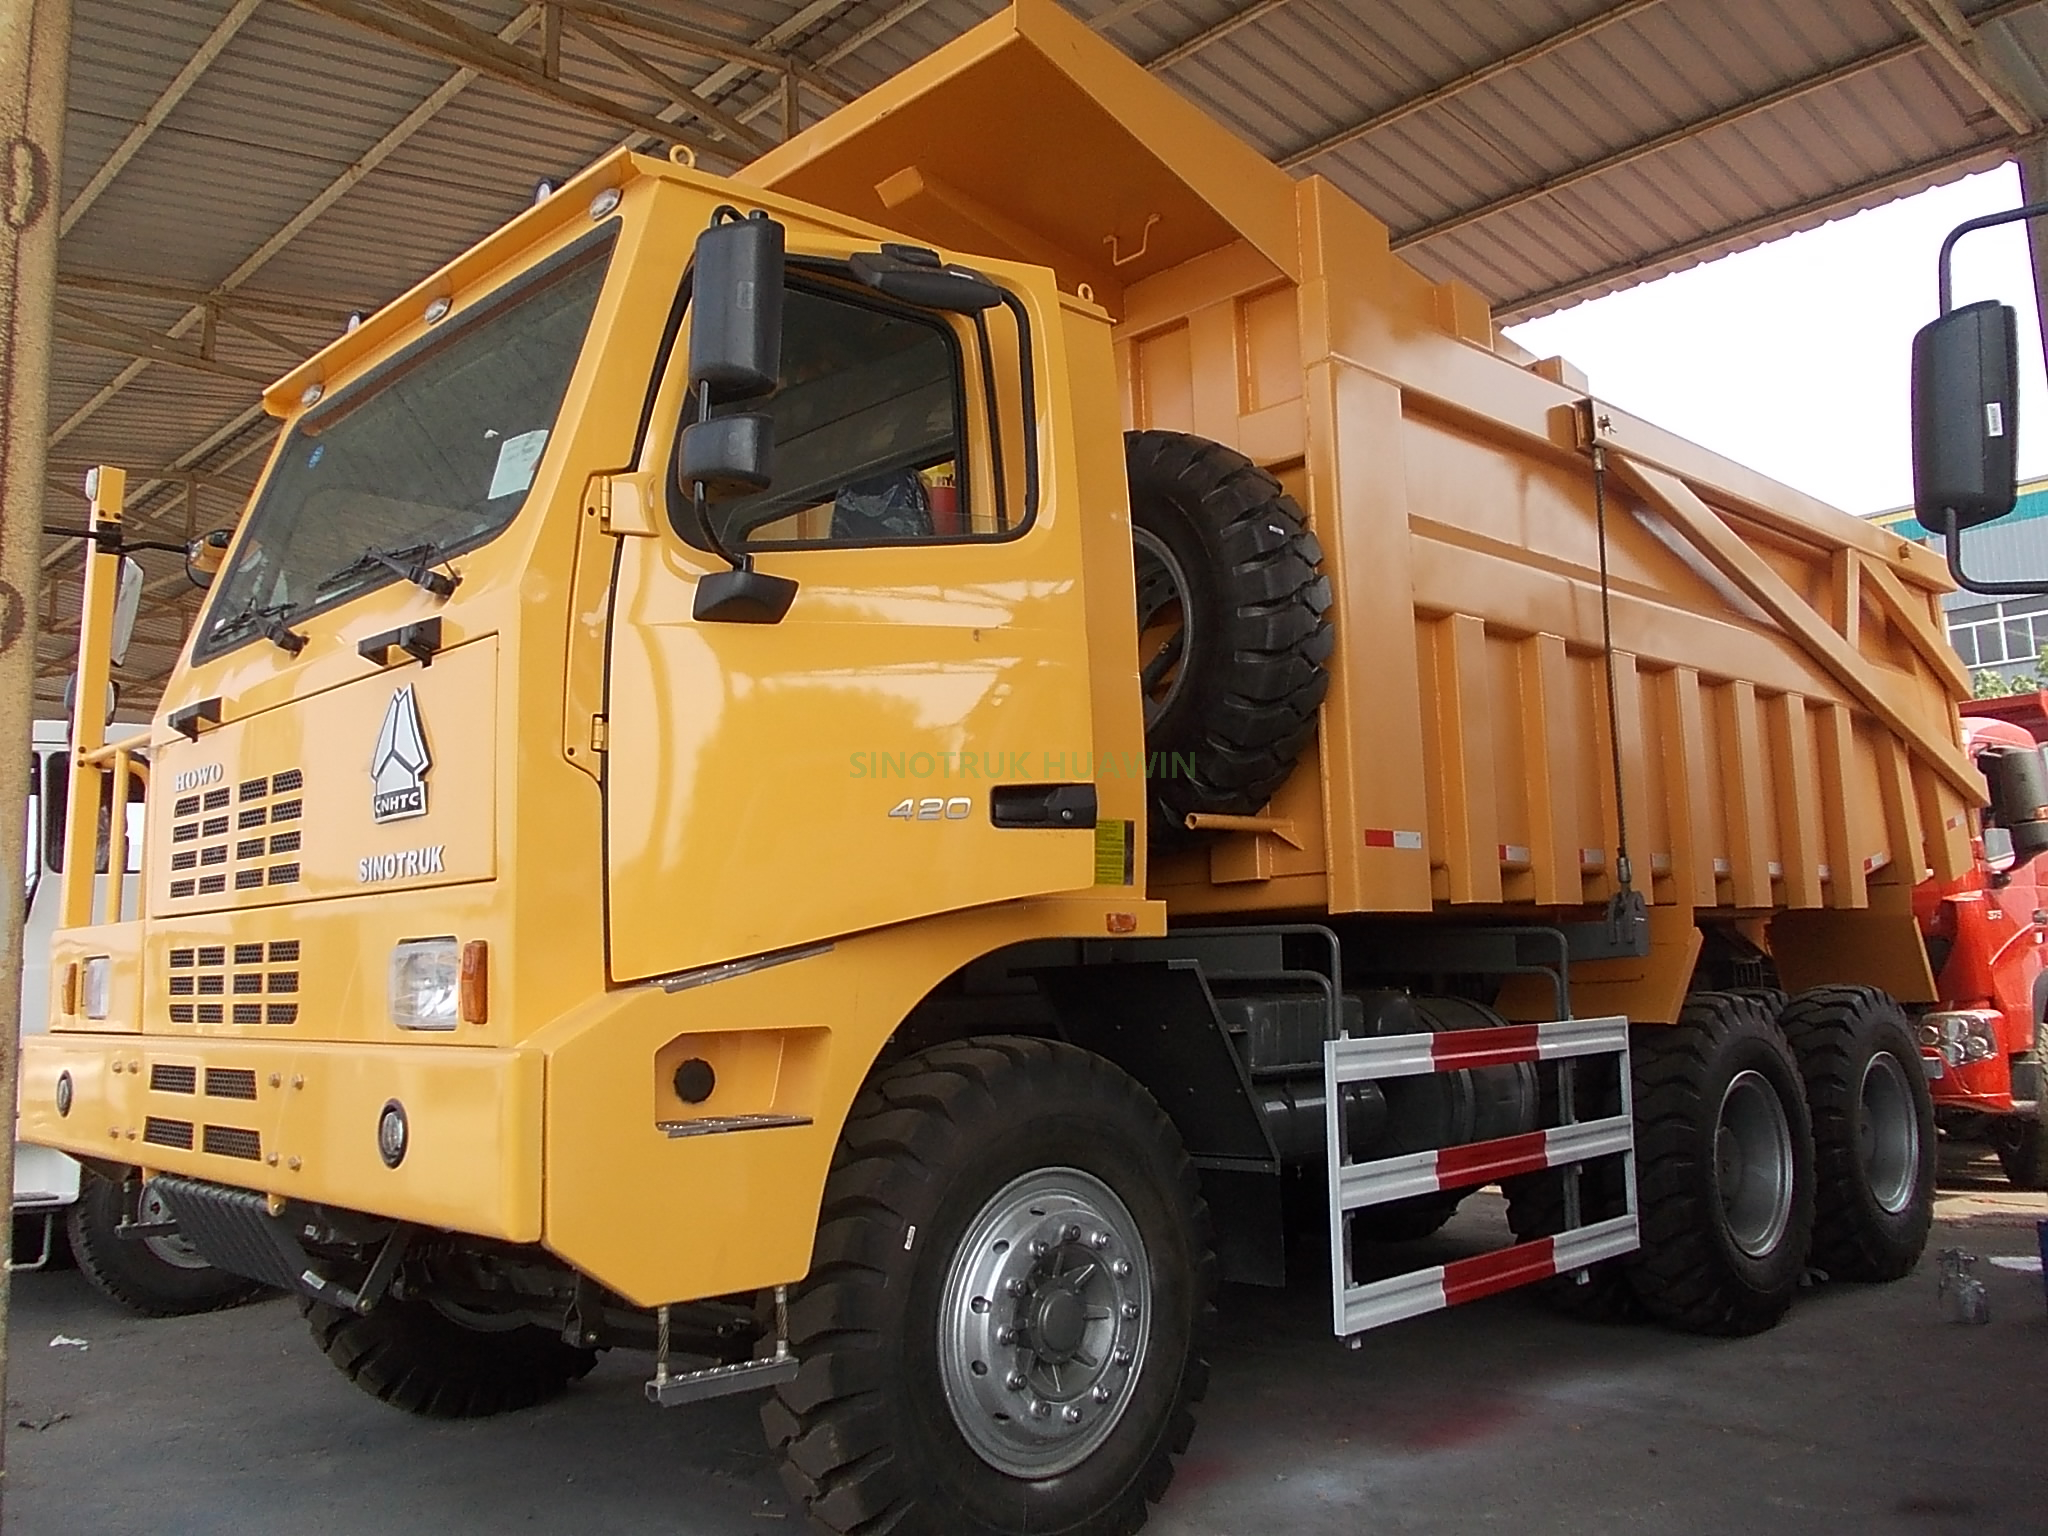 SINOTRUK New Mining 6x4 Dump Truck